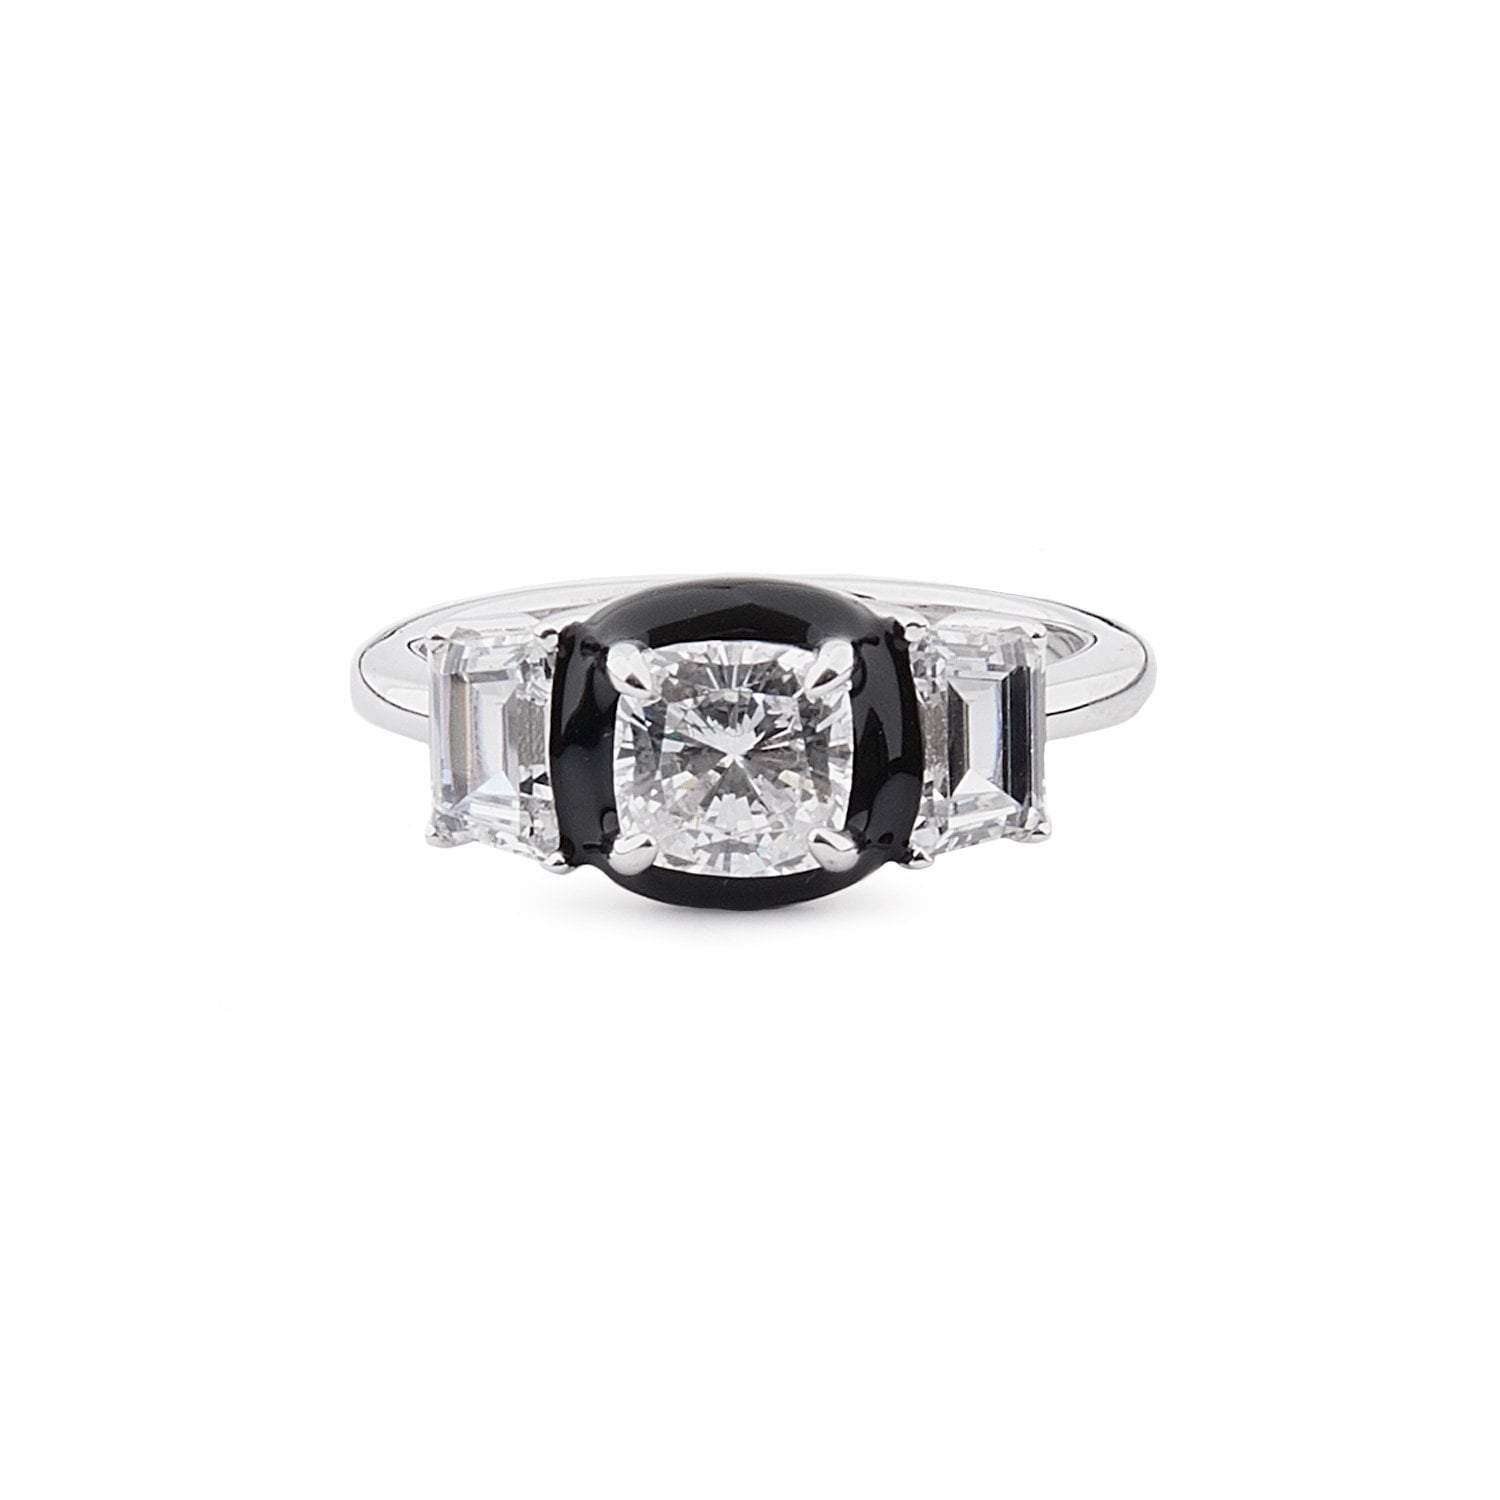 Art Deco Style Ring: Sterling Silver, Cubic Zirconia, Black Enamel 